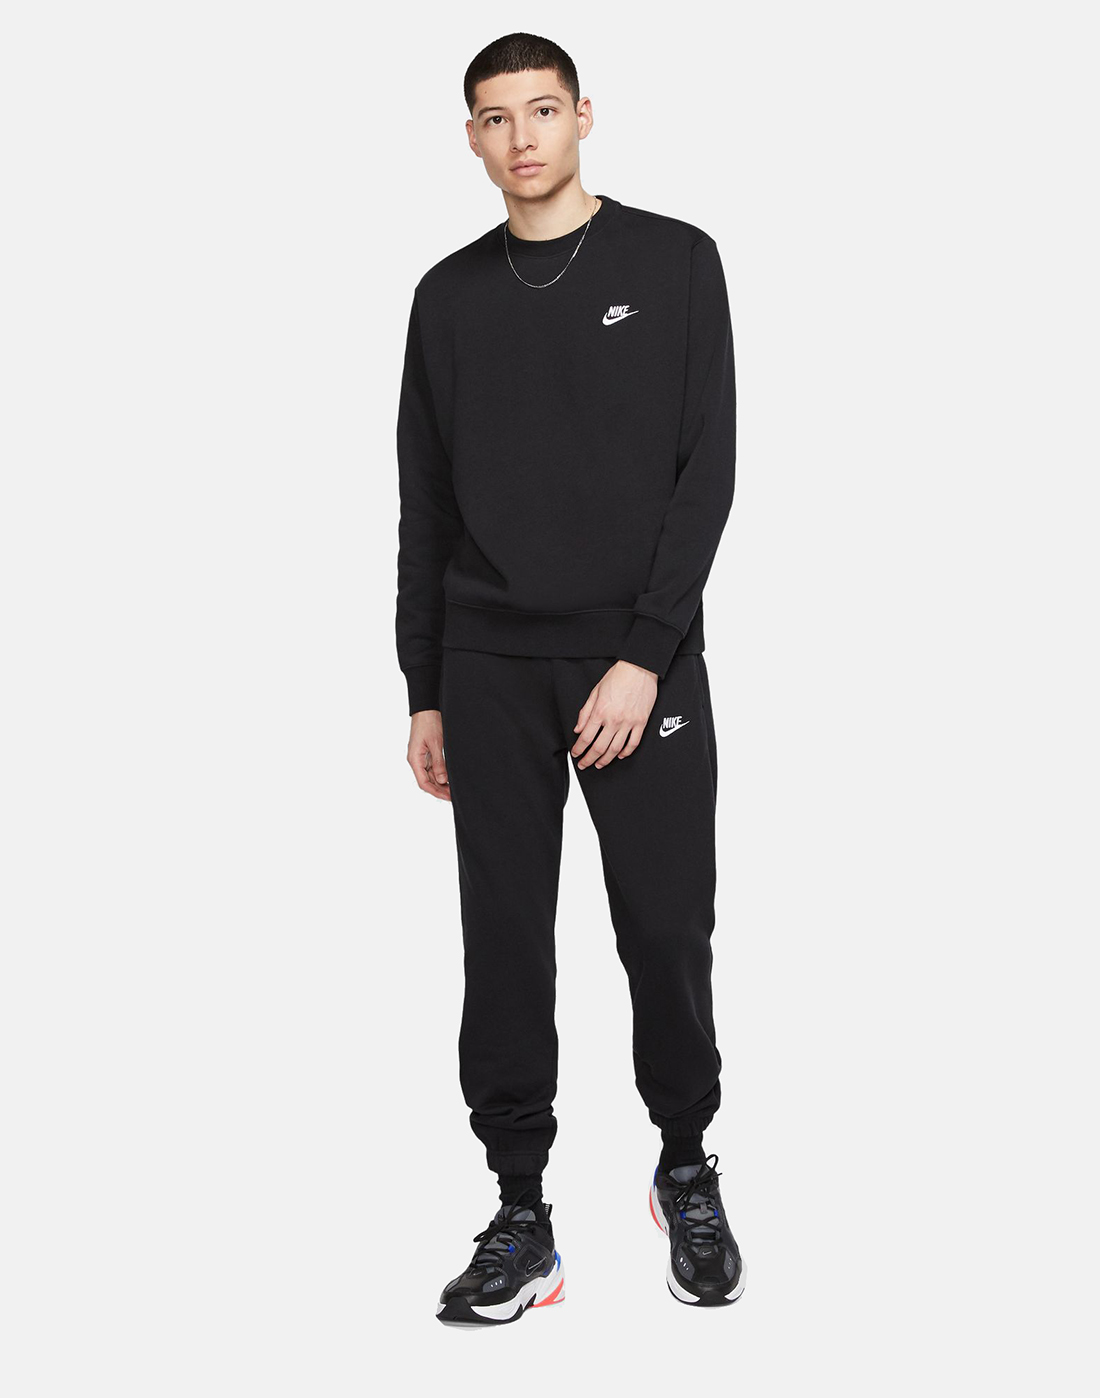 Men's Black Nike Sweatshirt | Life Style Sports